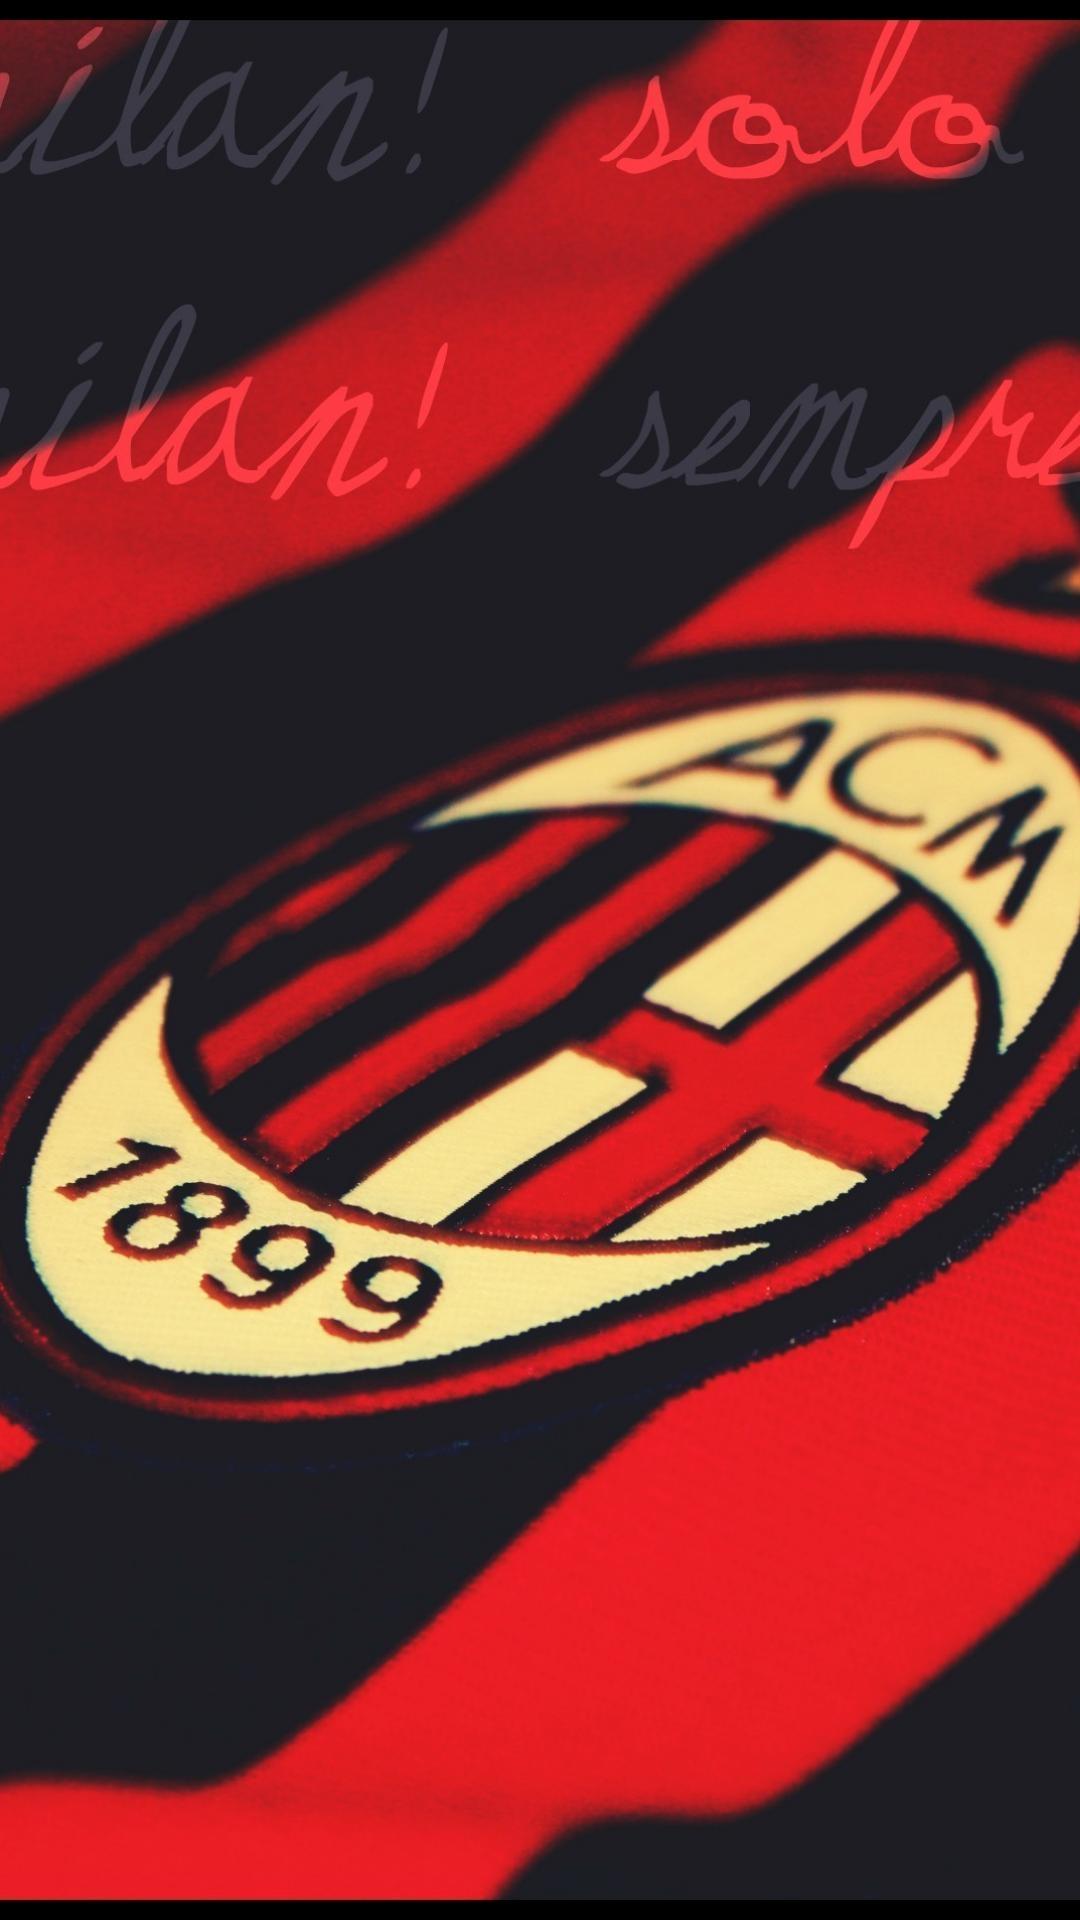 New Ac Milan Wallpaper HD iPhone 6. Great Foofball Club